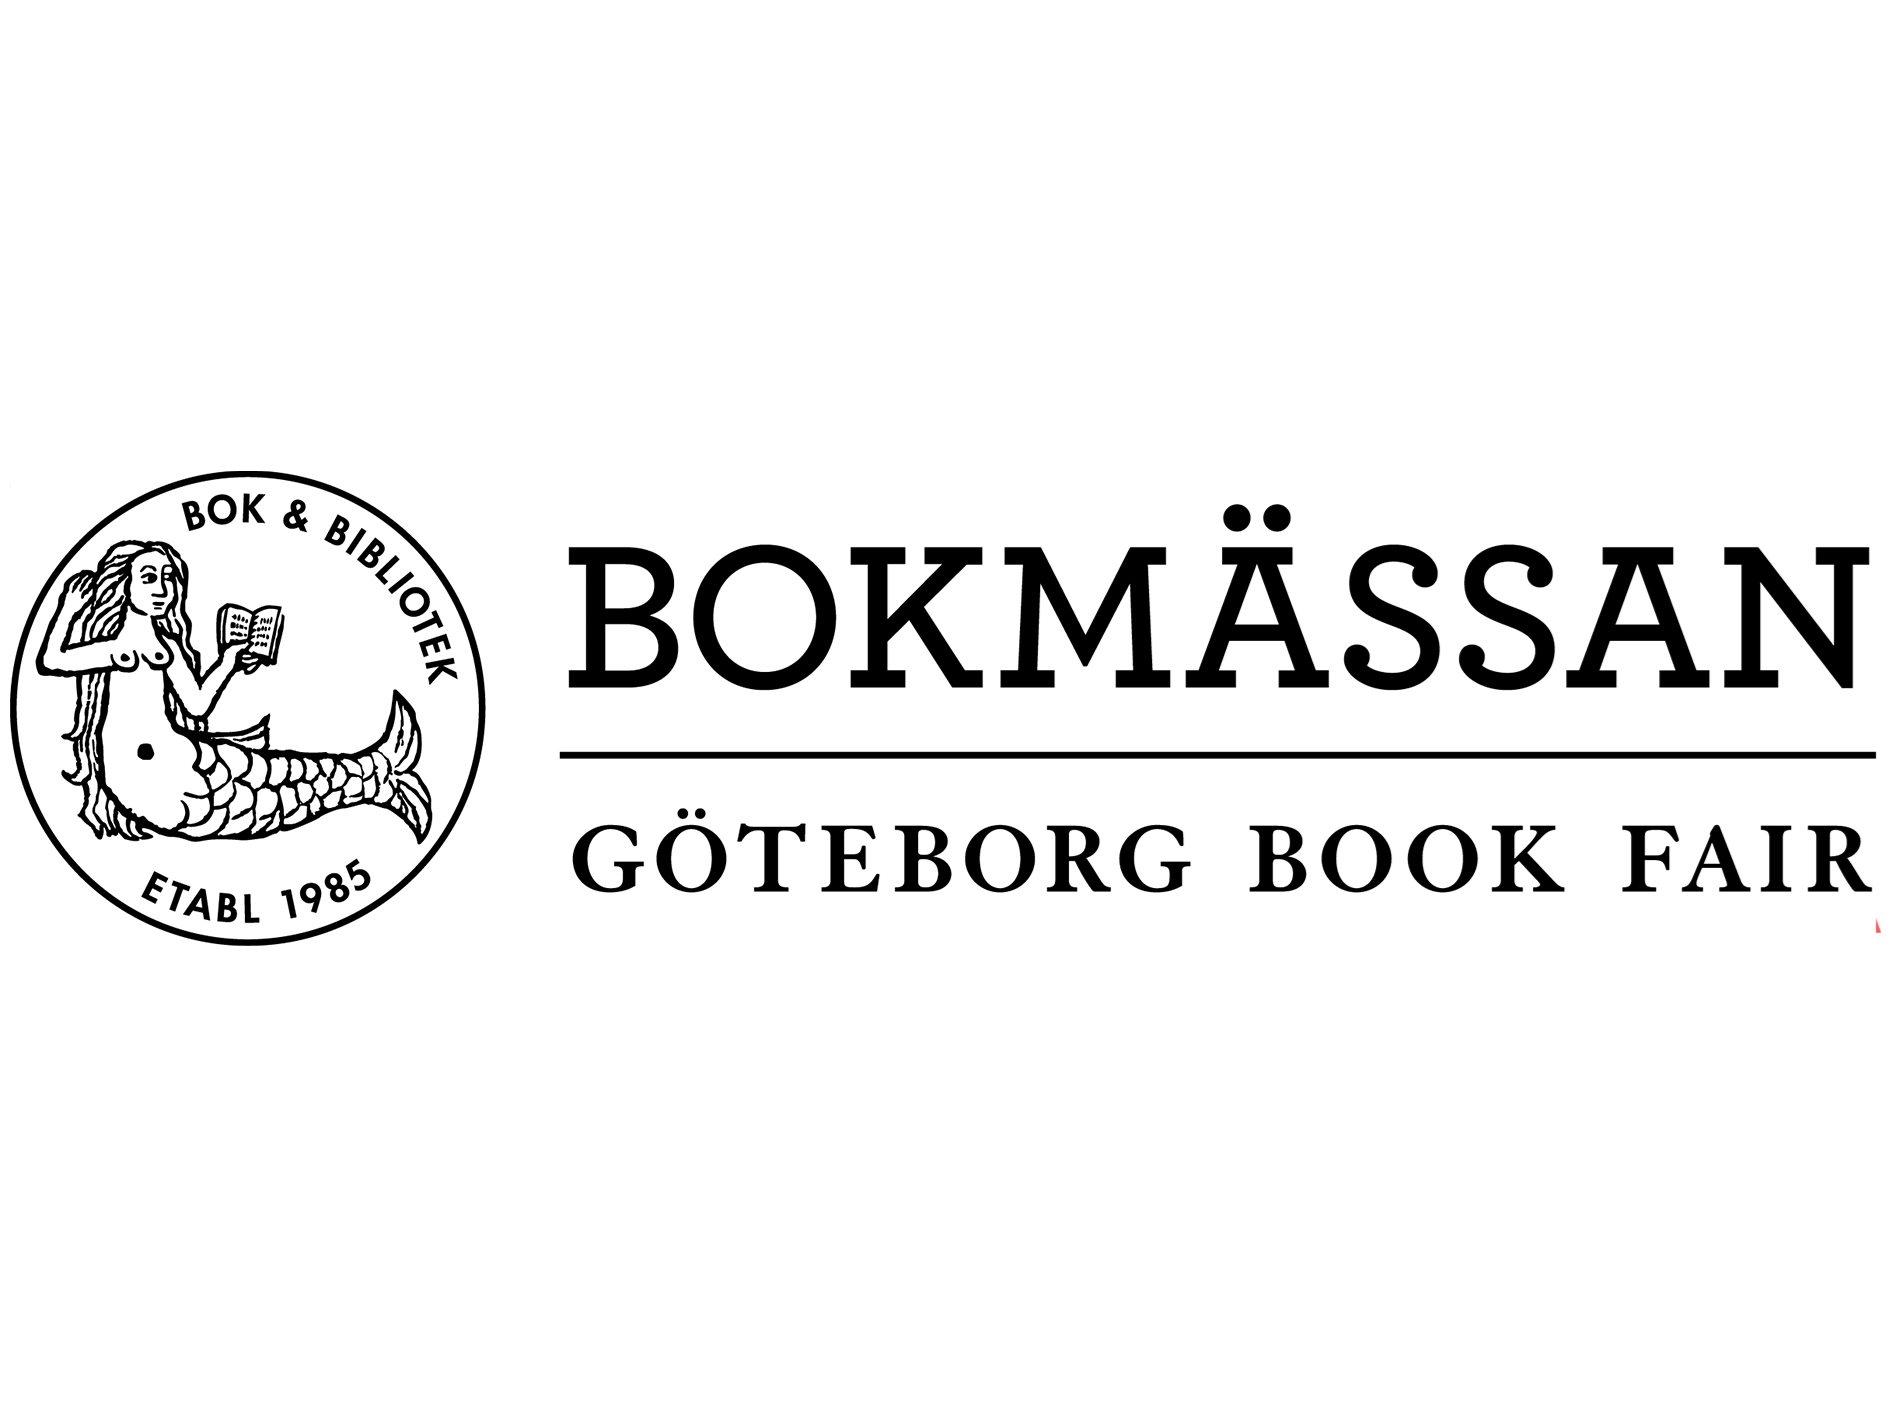 Logo of Bokmässan